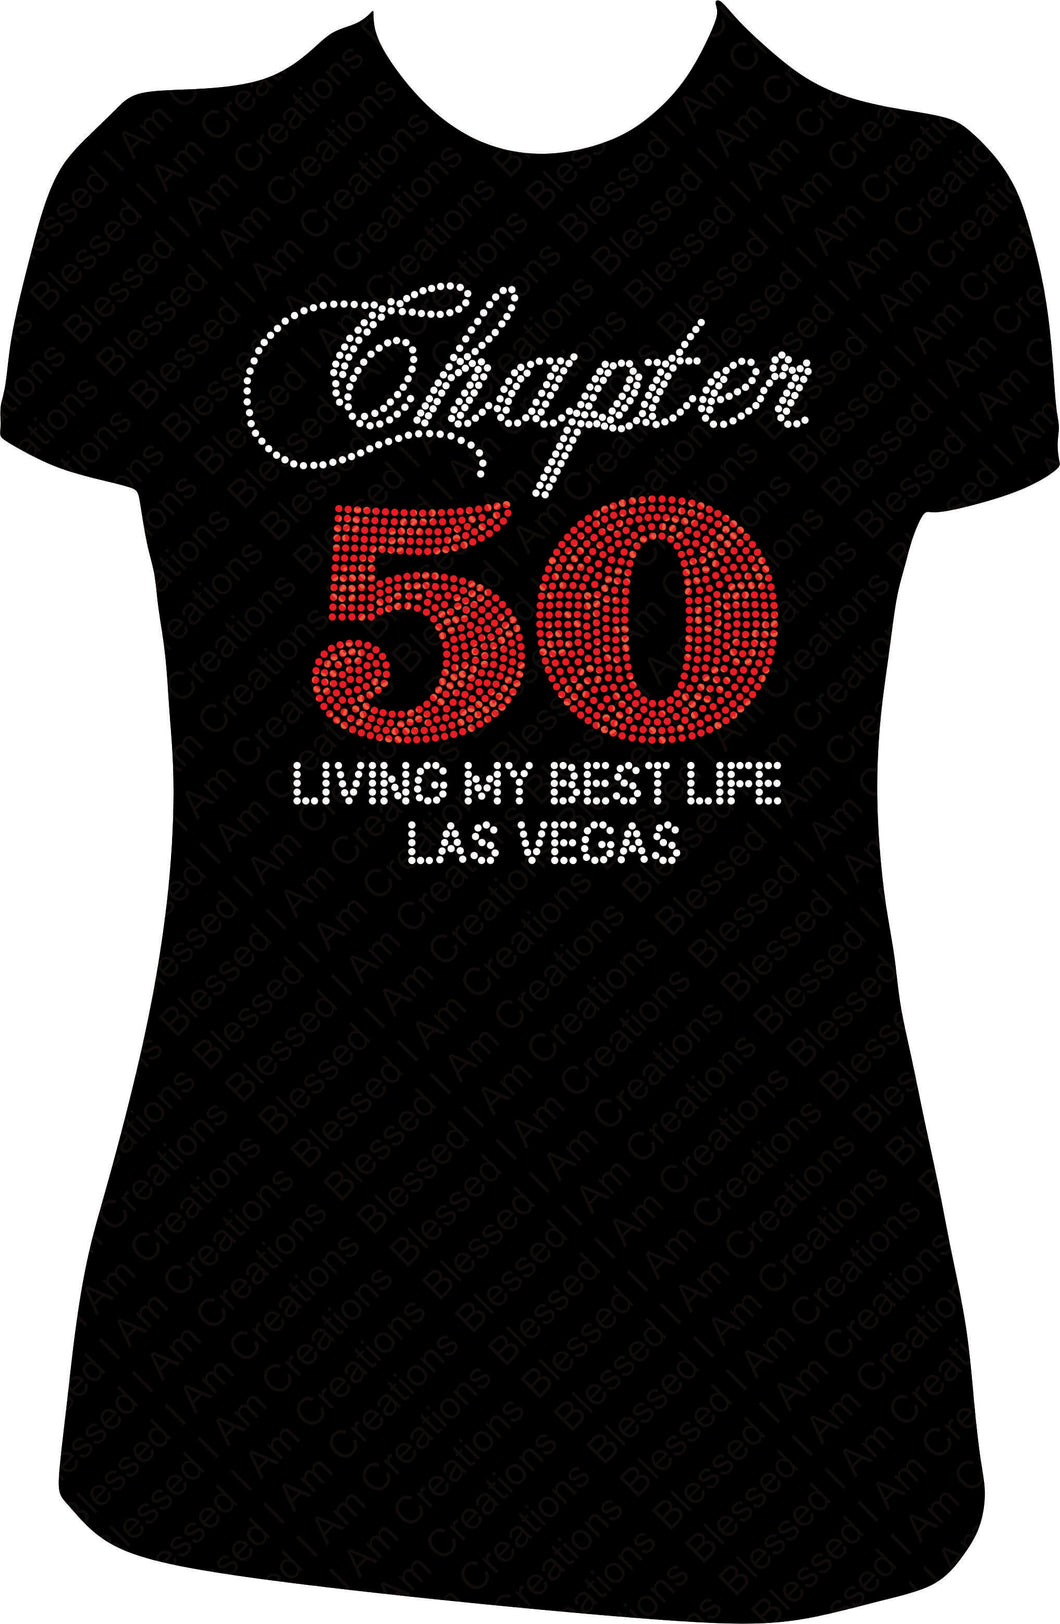 Chapter 50 Rhinestone shirt, 50th Birthday Shirt, Rhinestone Shirt, Bling Shirt, Chapter Birthday Shirt, Birthday girl shirt, bling Birthday shirt, Living my blessed life shirt, 